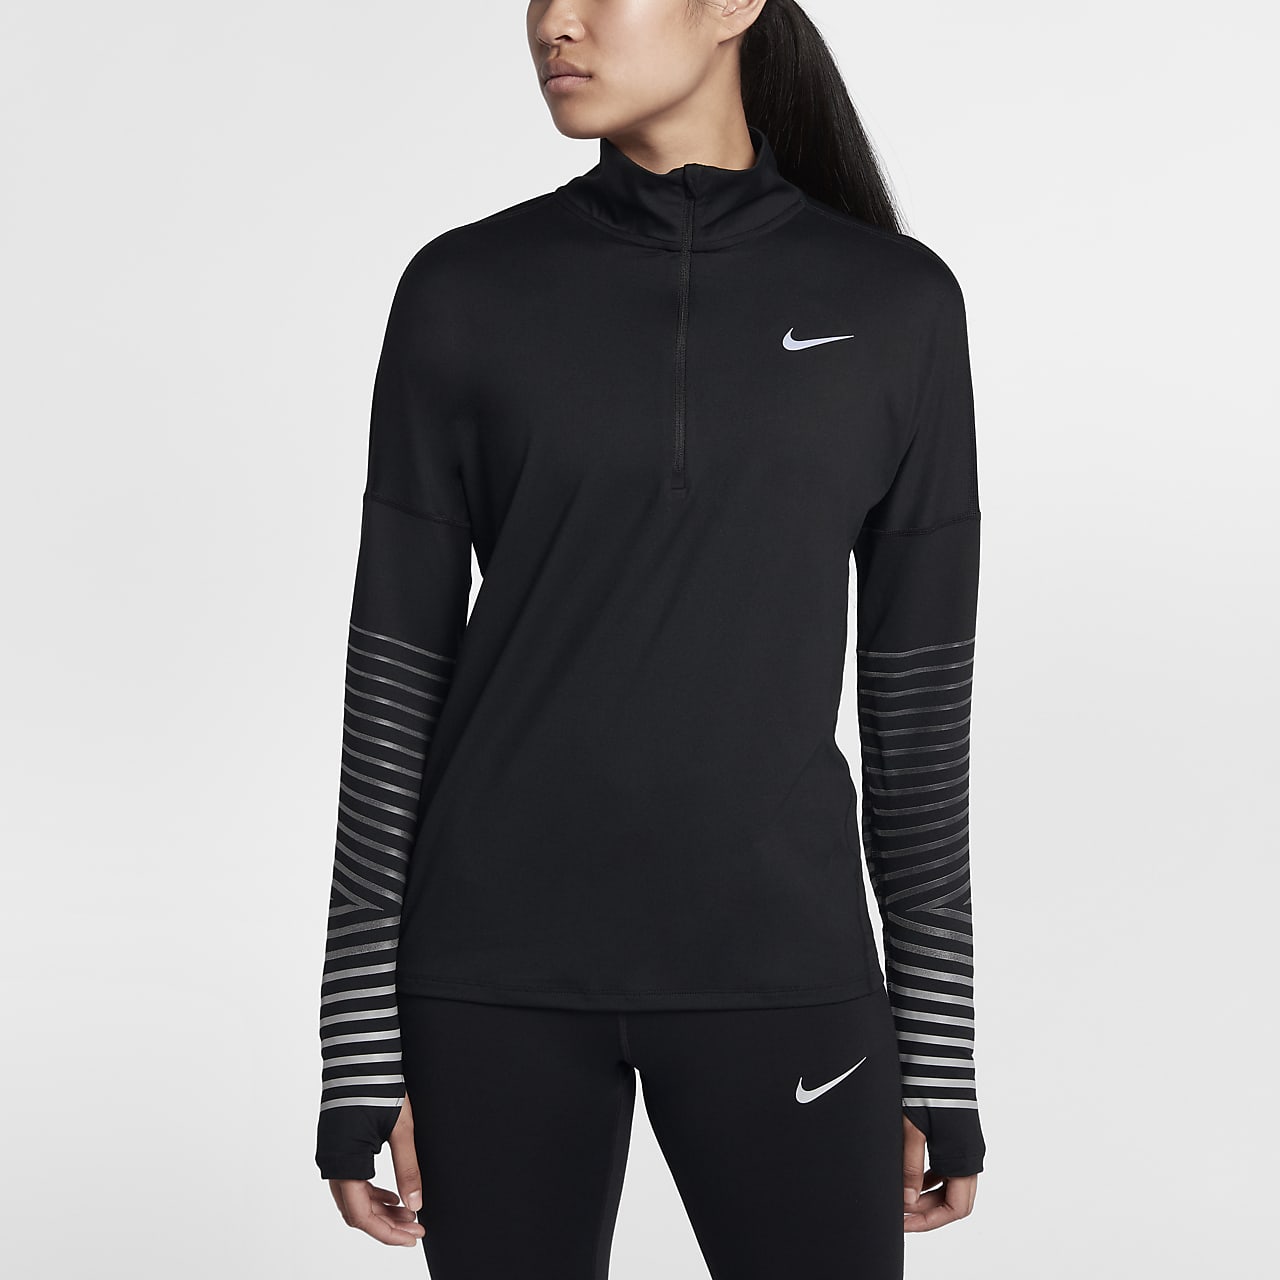 Reflective Long-Sleeve Running Top. Nike SG